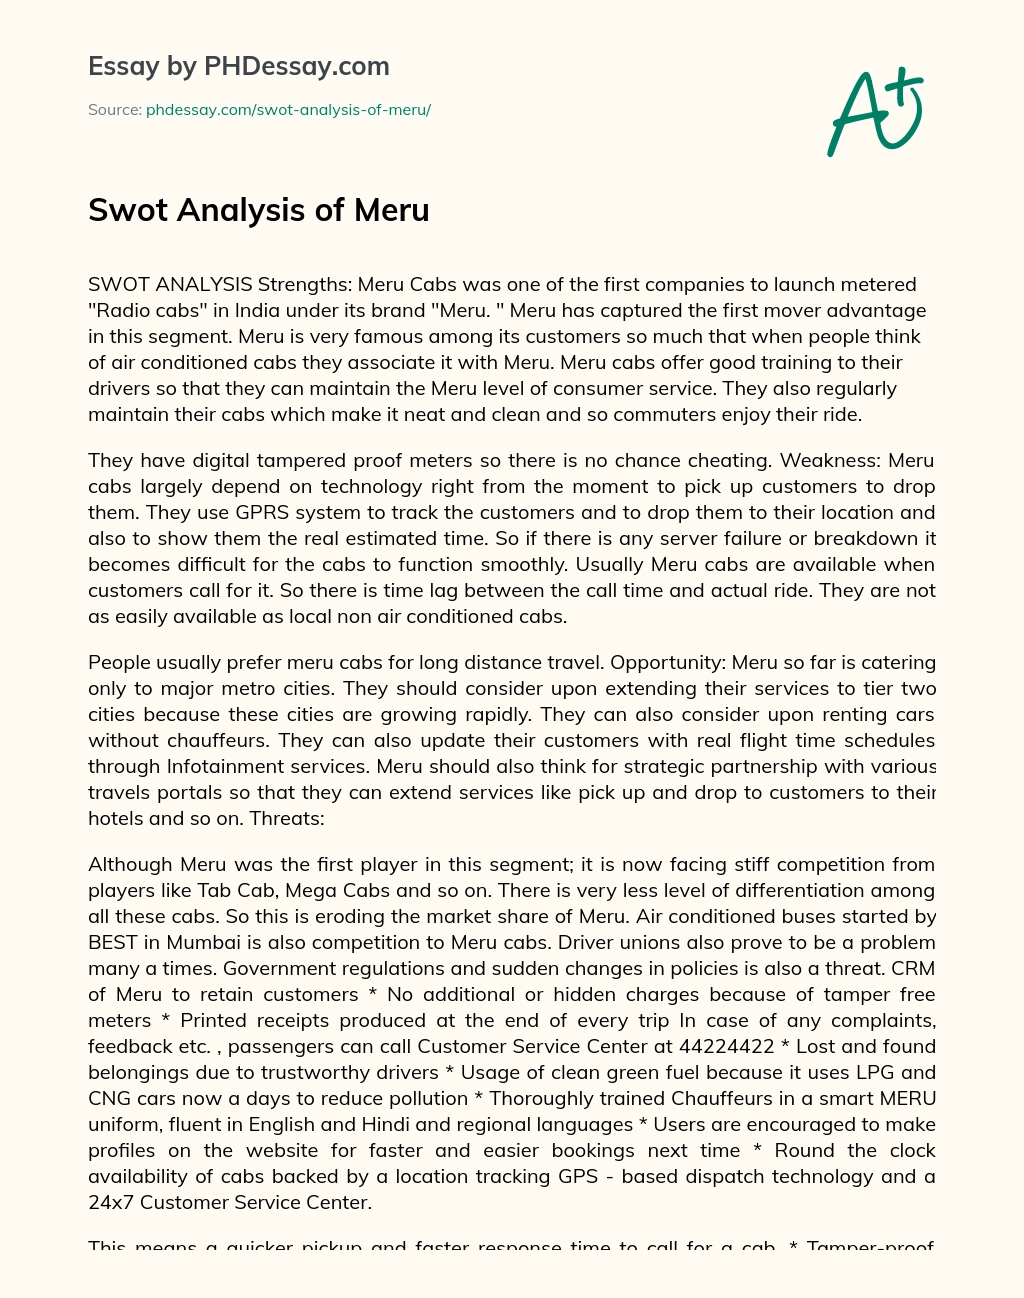 Swot Analysis of Meru essay